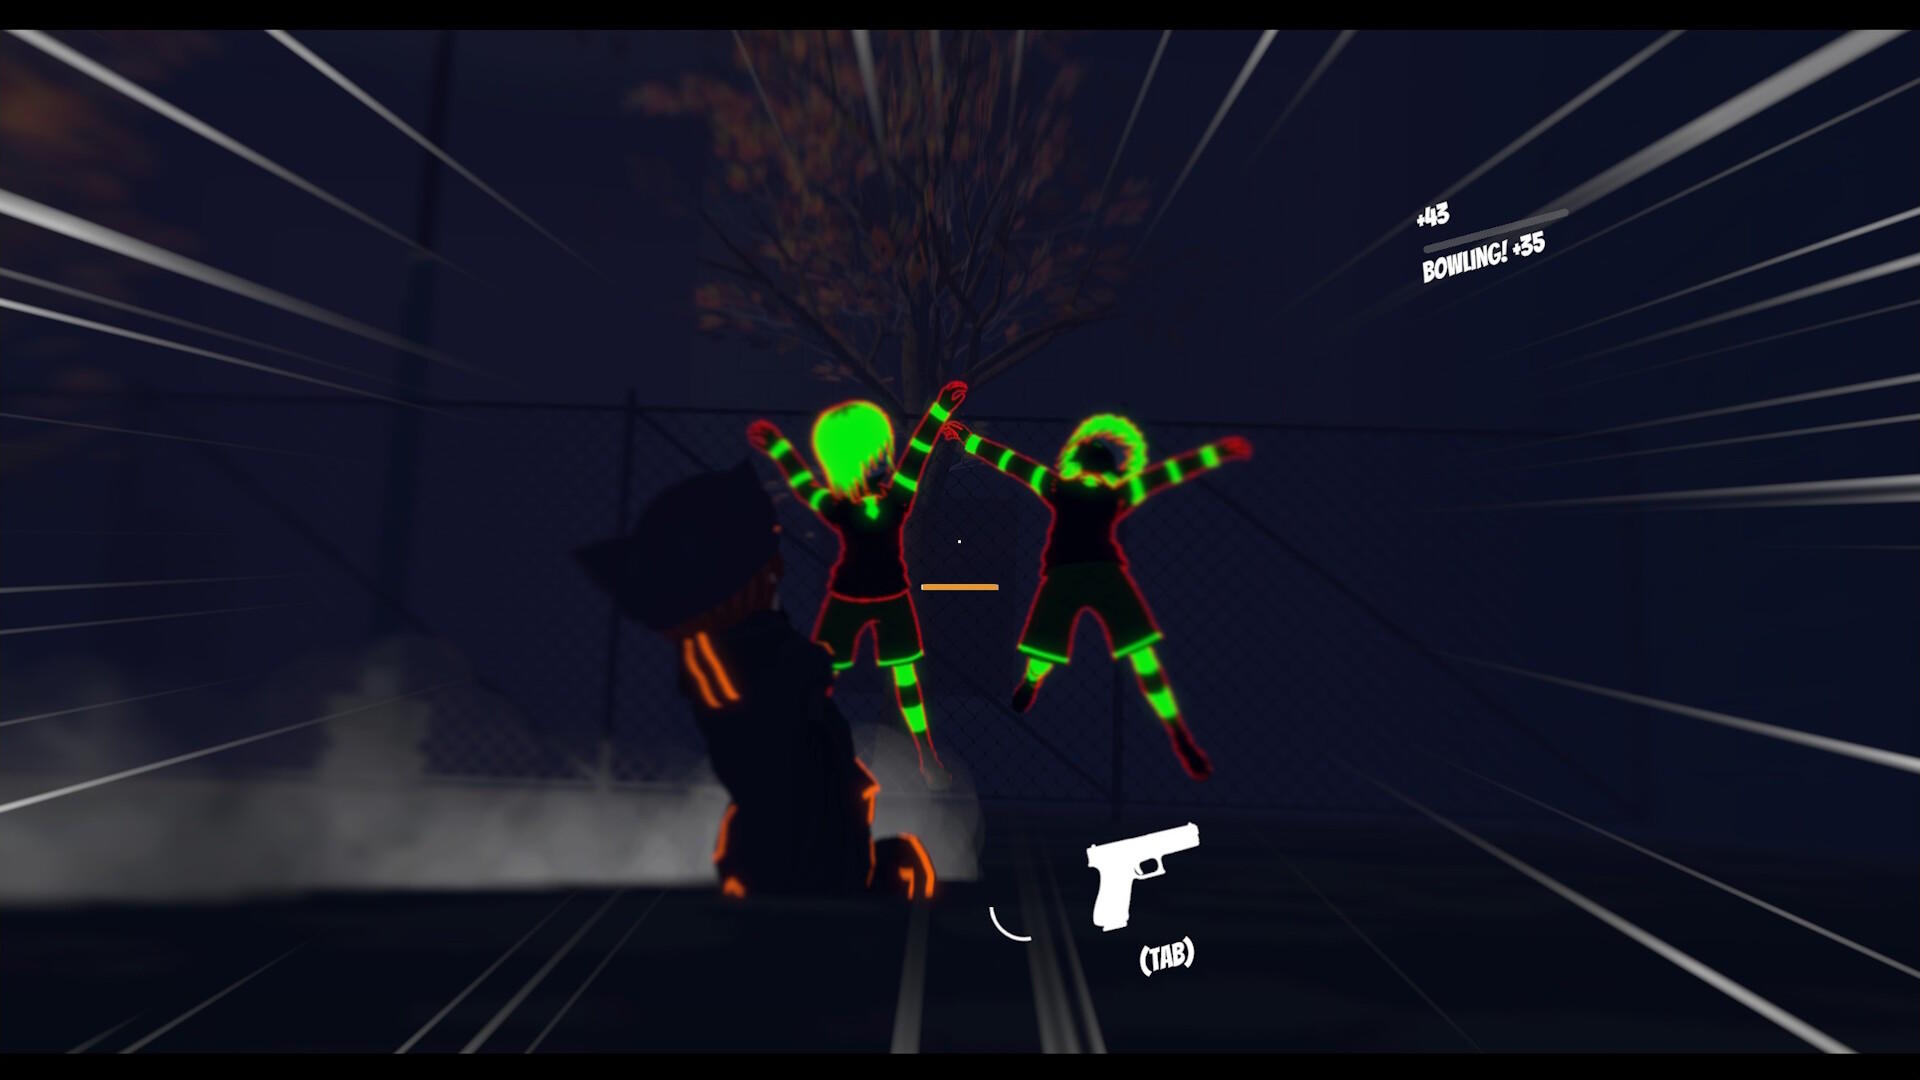 SmugForce screenshot game